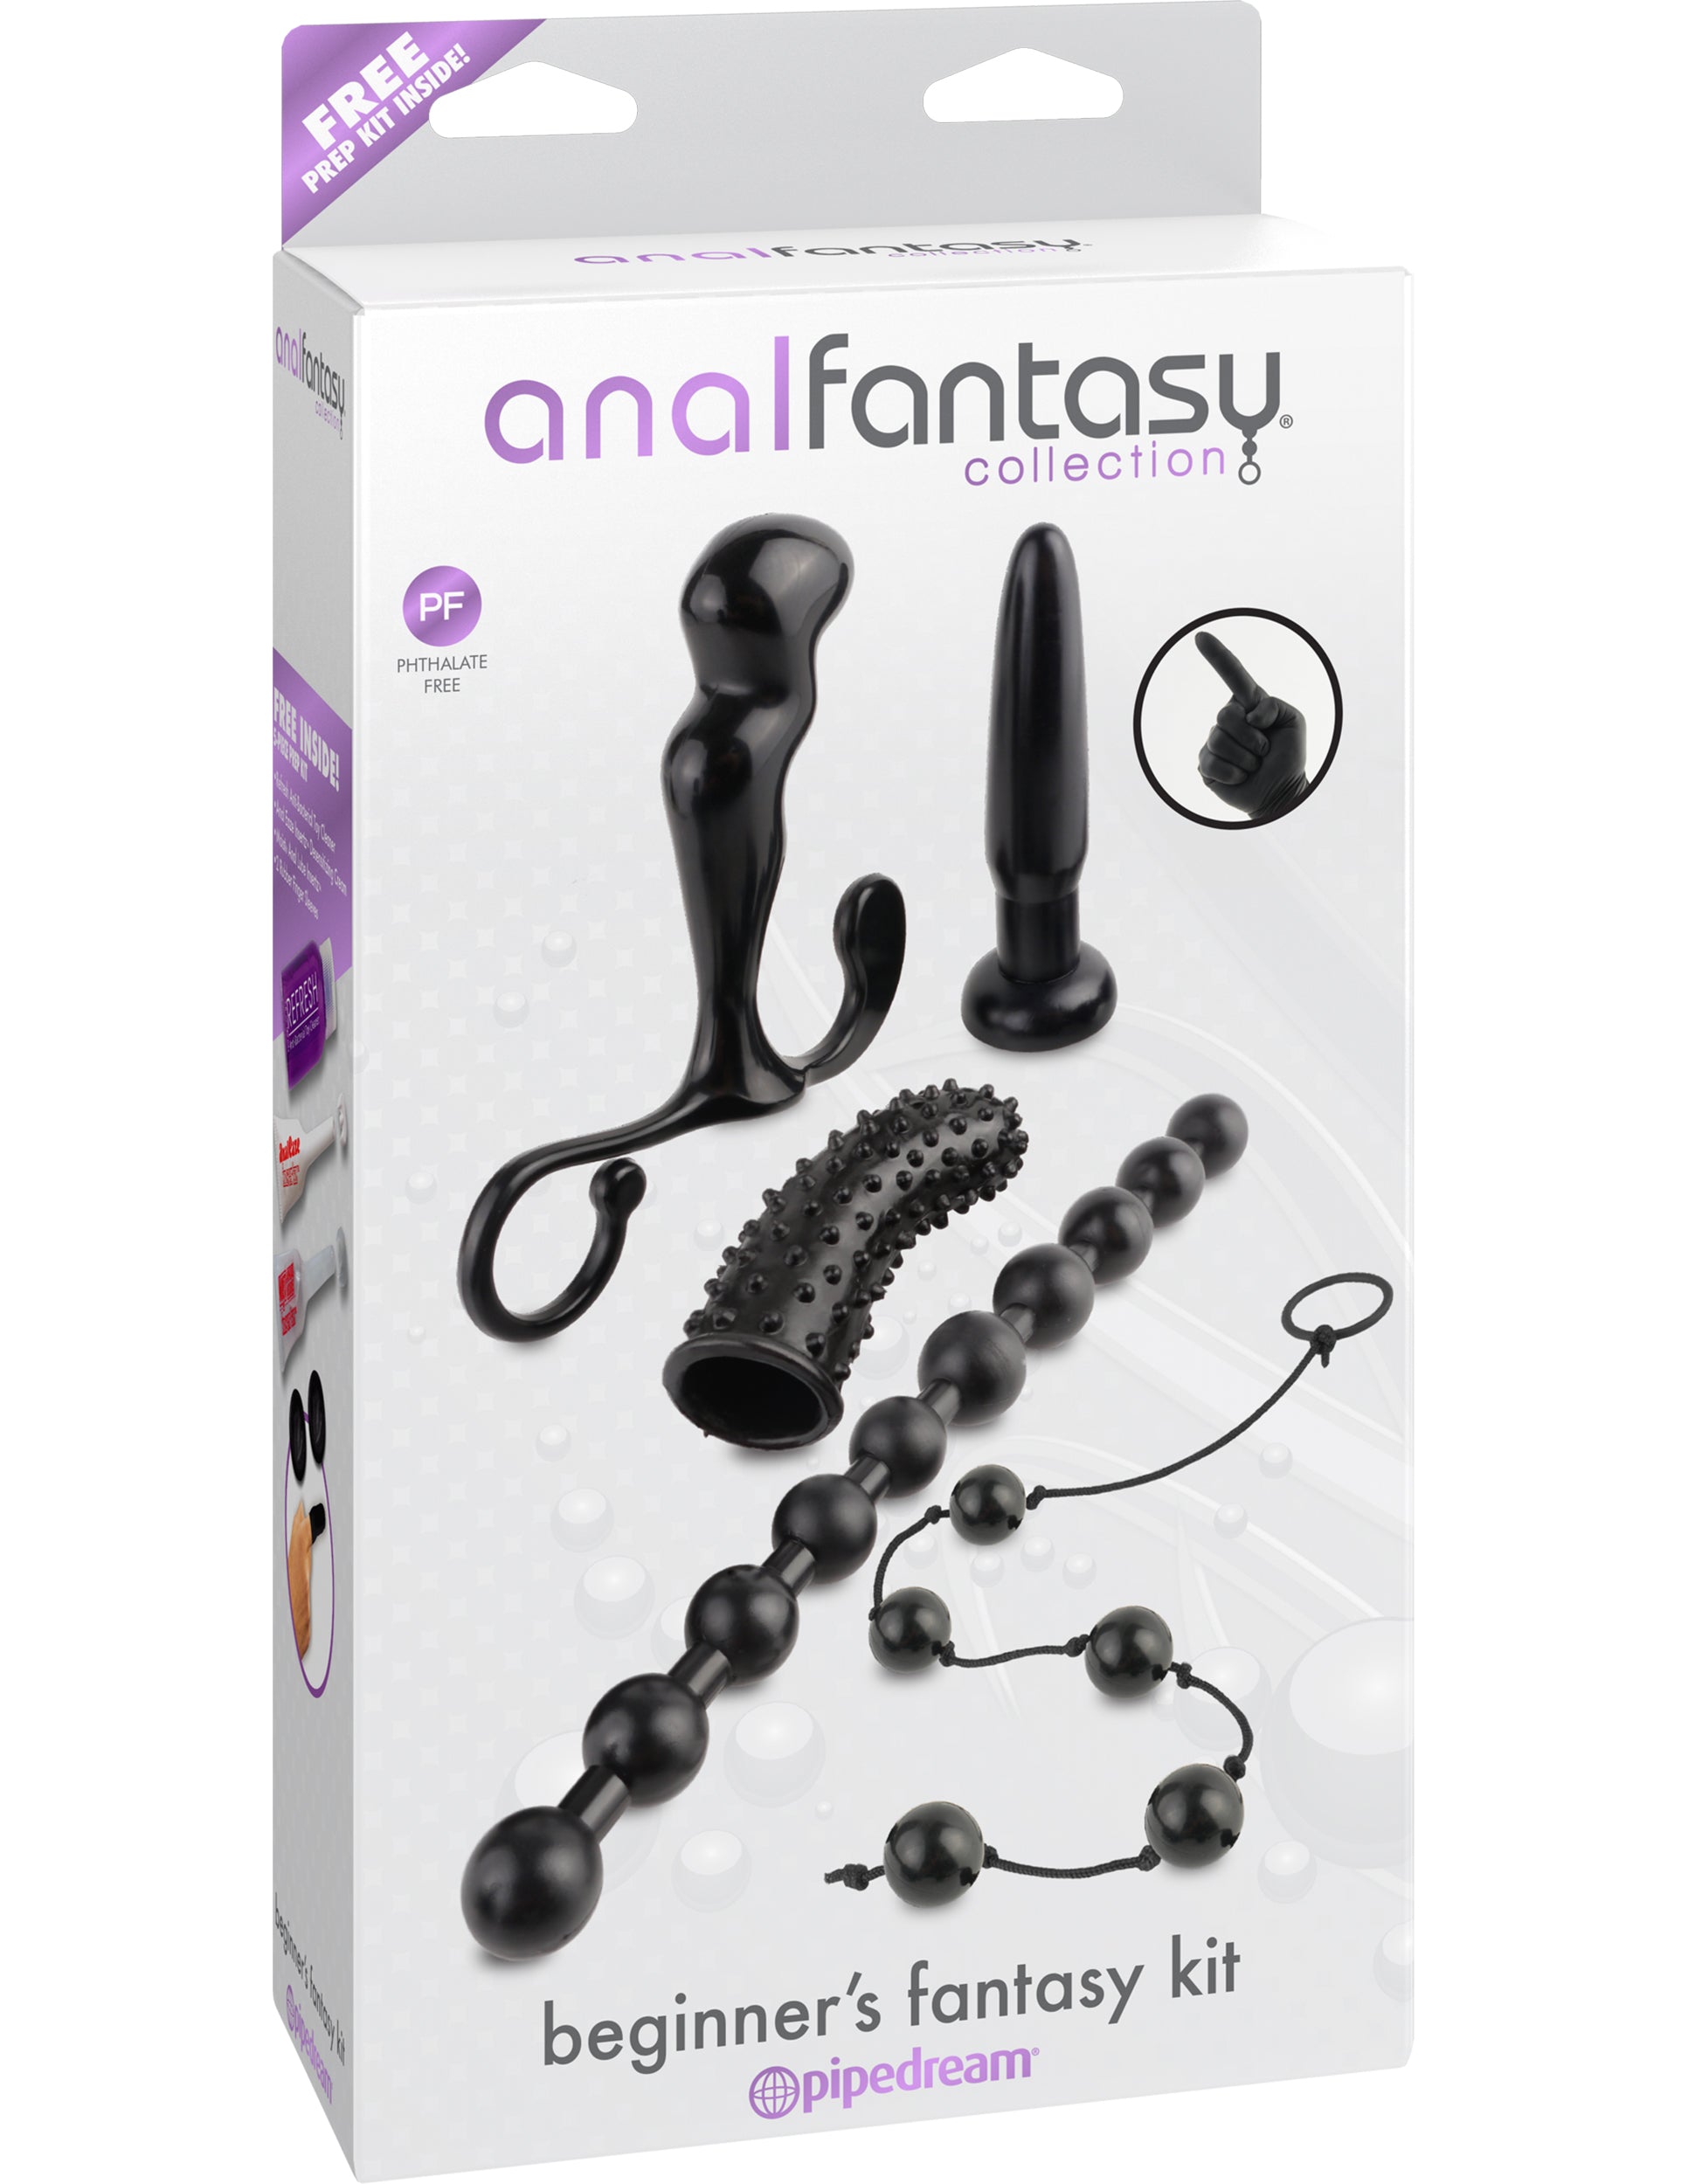 Anal Fantasy Beginners Fantasy Kit